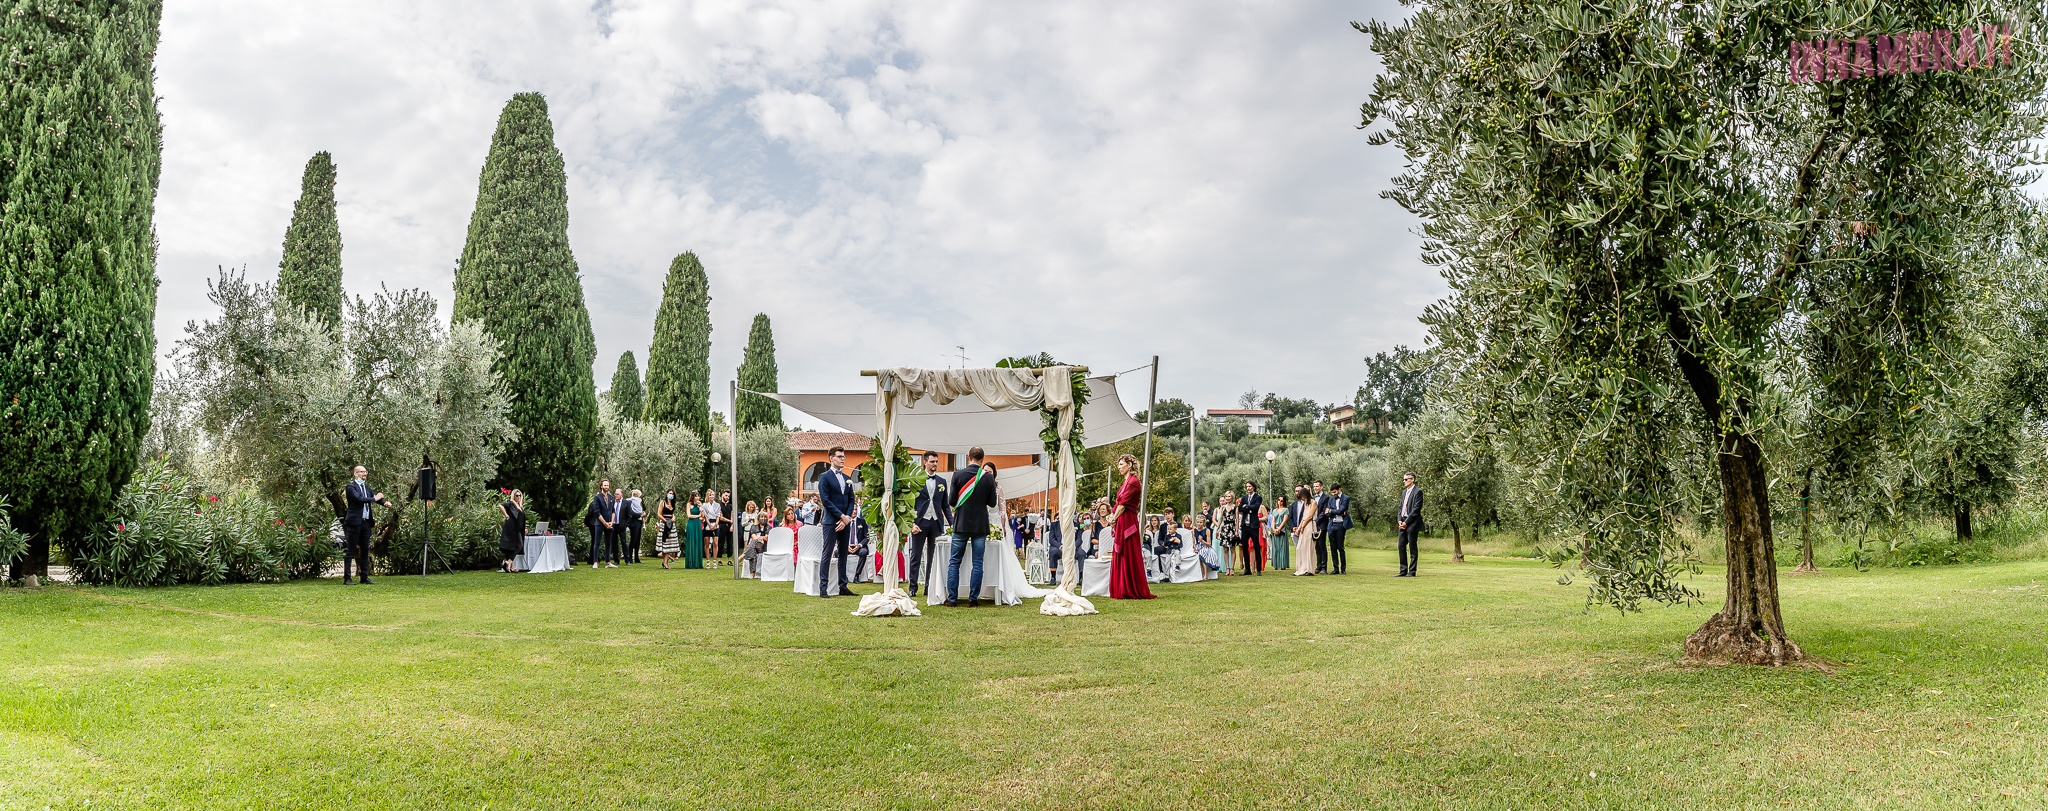 Location Villa Avanzi | Matrimonio